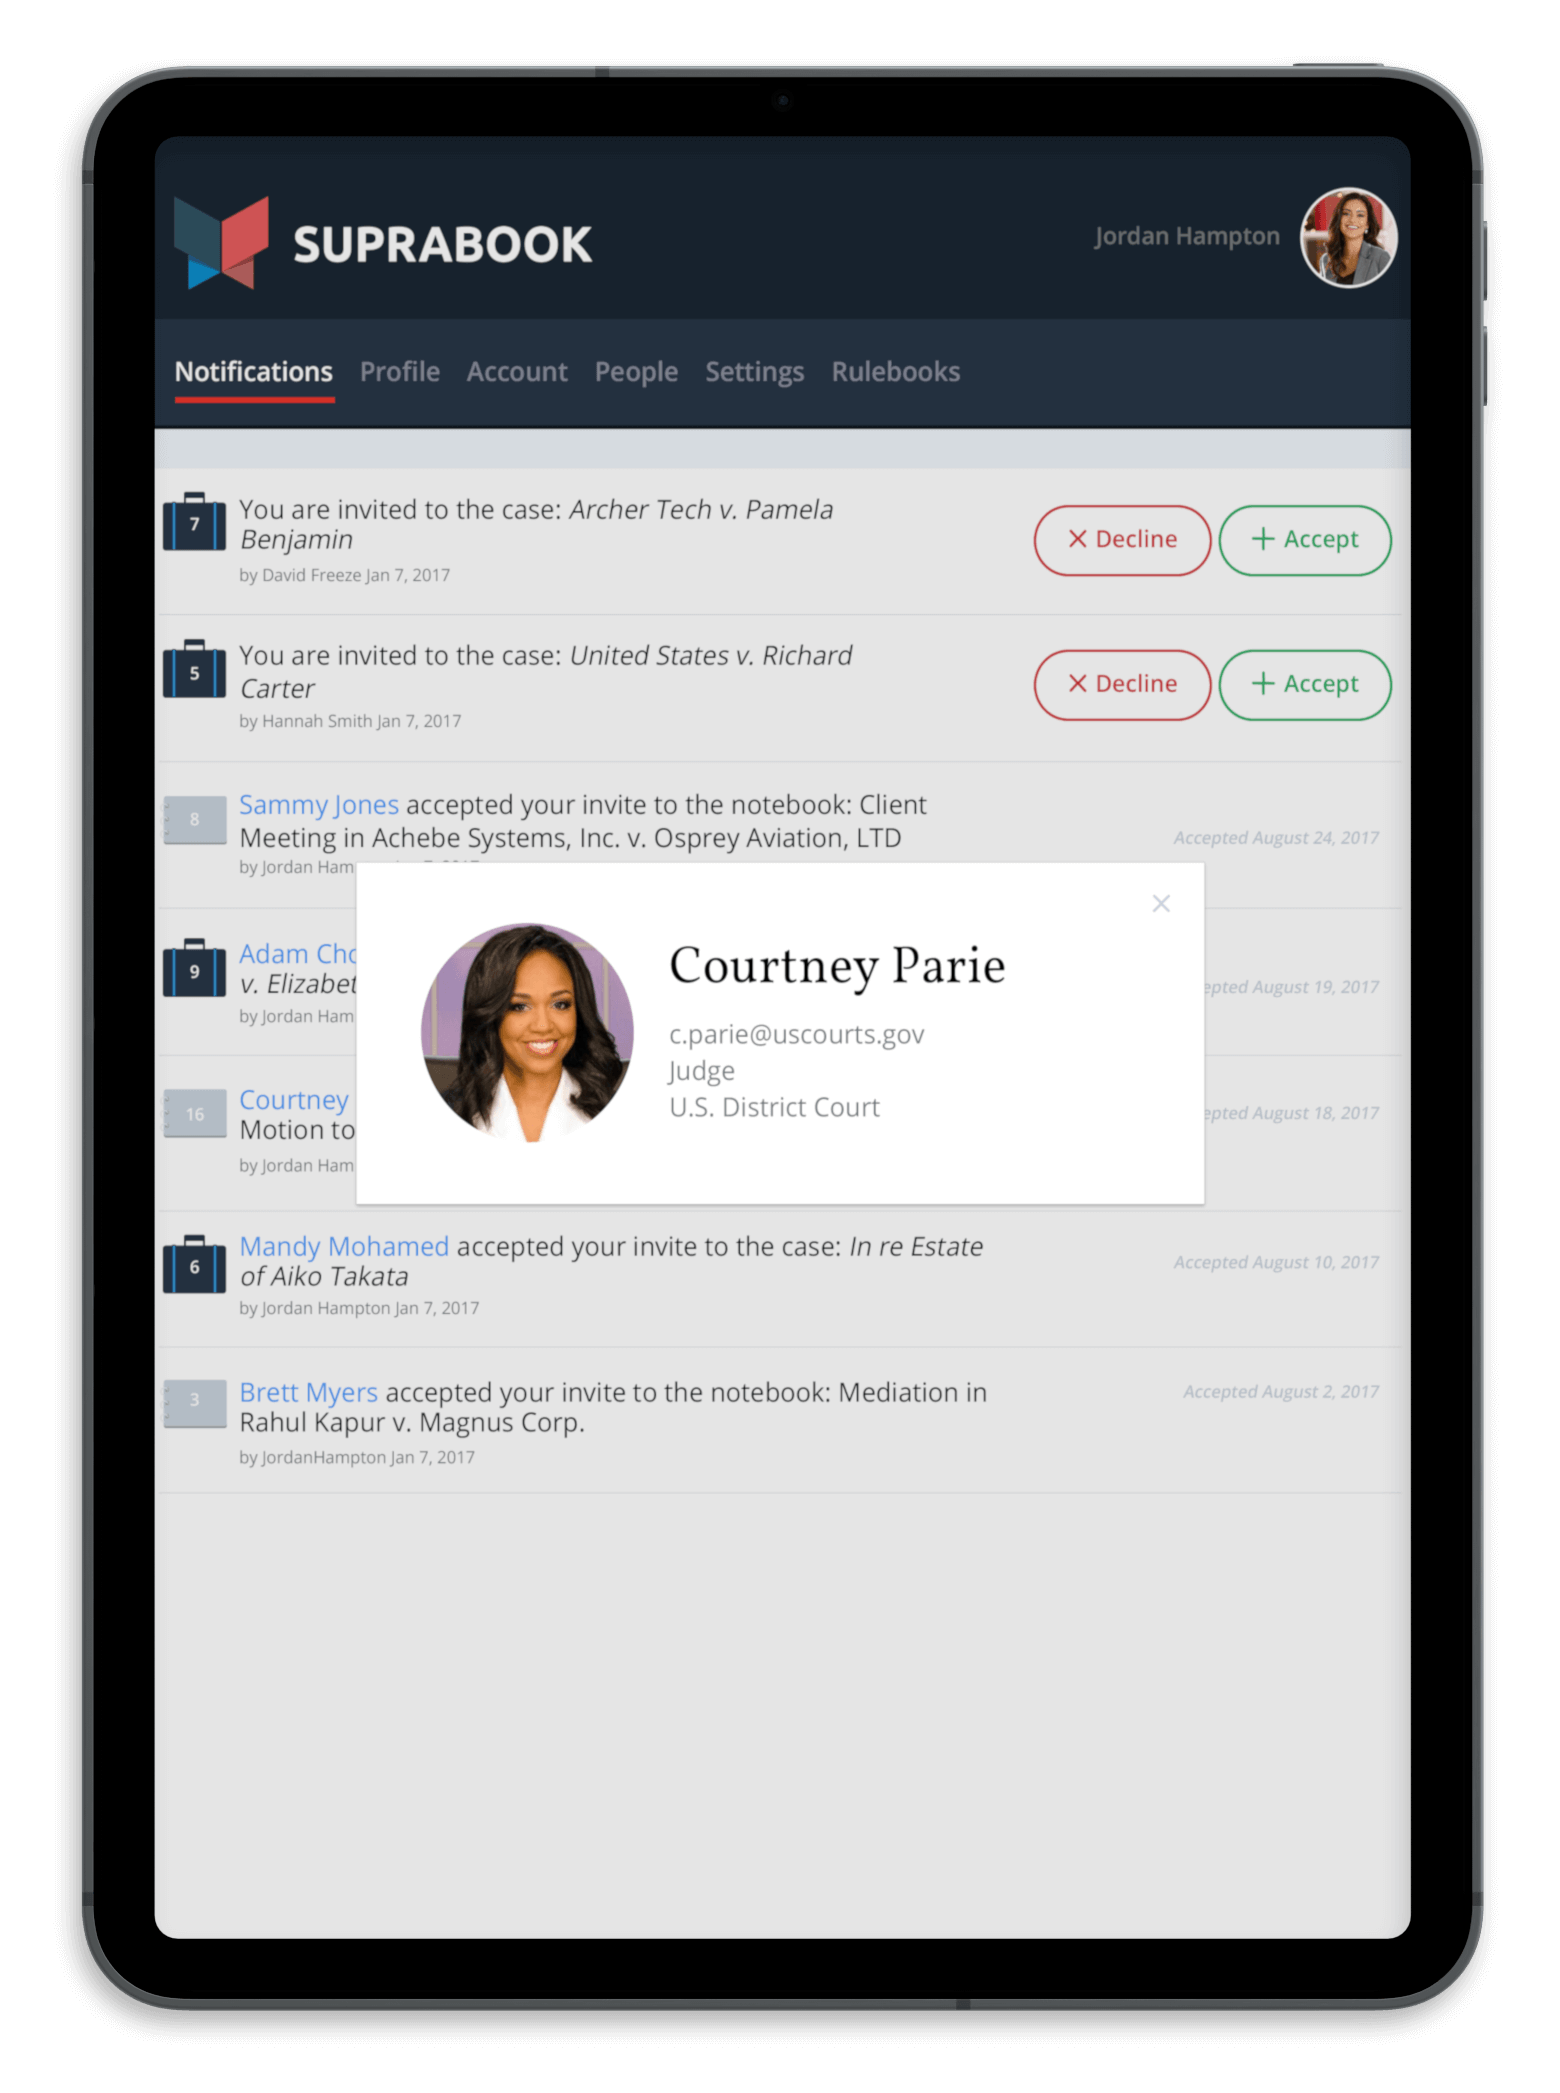 Suprabook Mobile App by Dallas Developers 7T, Inc